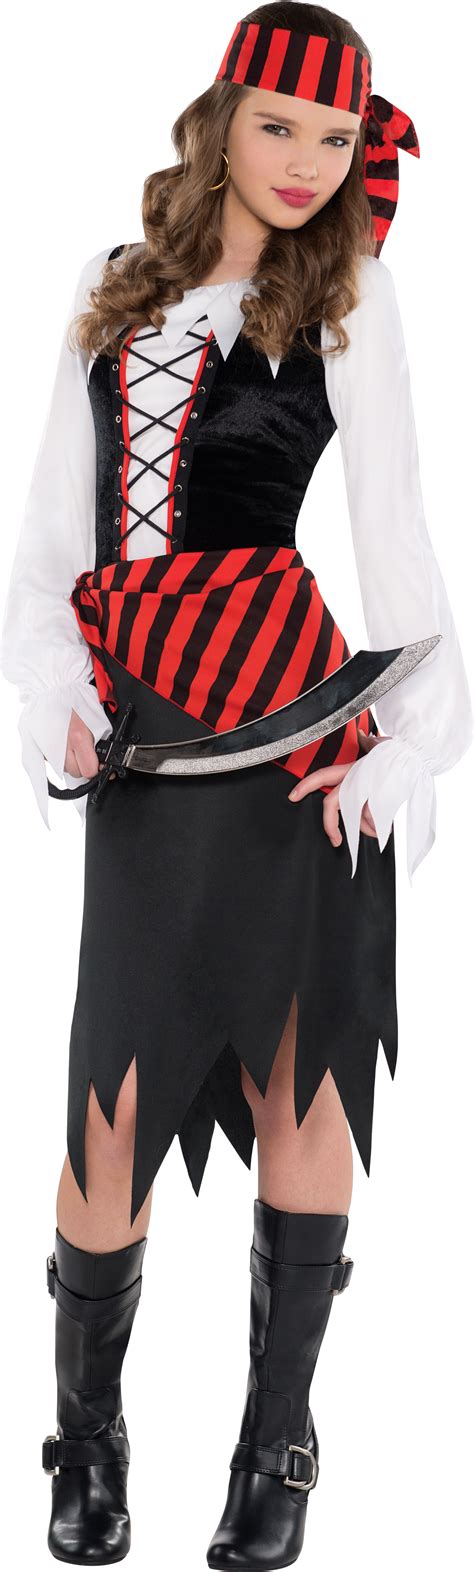 Girls Teen Bucaneer Beauty Pirate Fancy Dress Costume